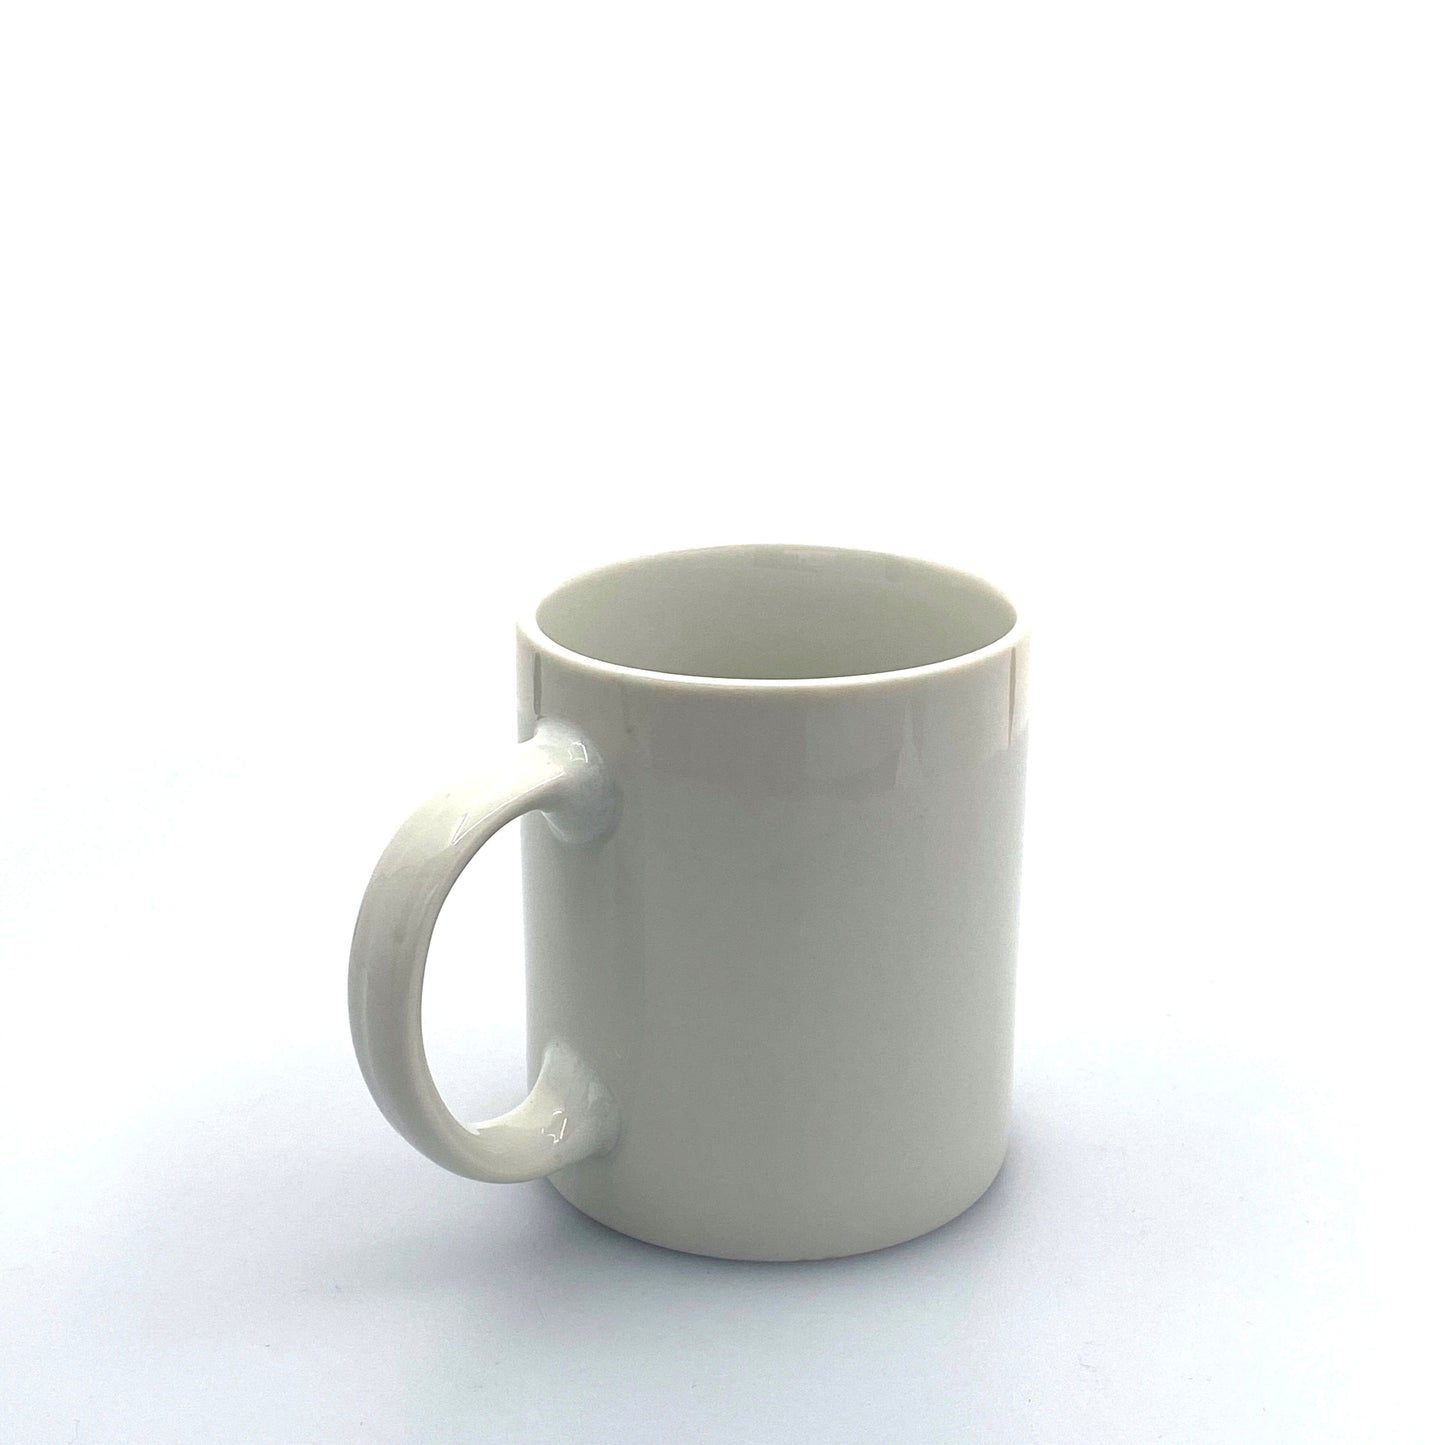 Novelty “Fisherman’s Excuse Mug” Humor White Ceramic Coffee Mug